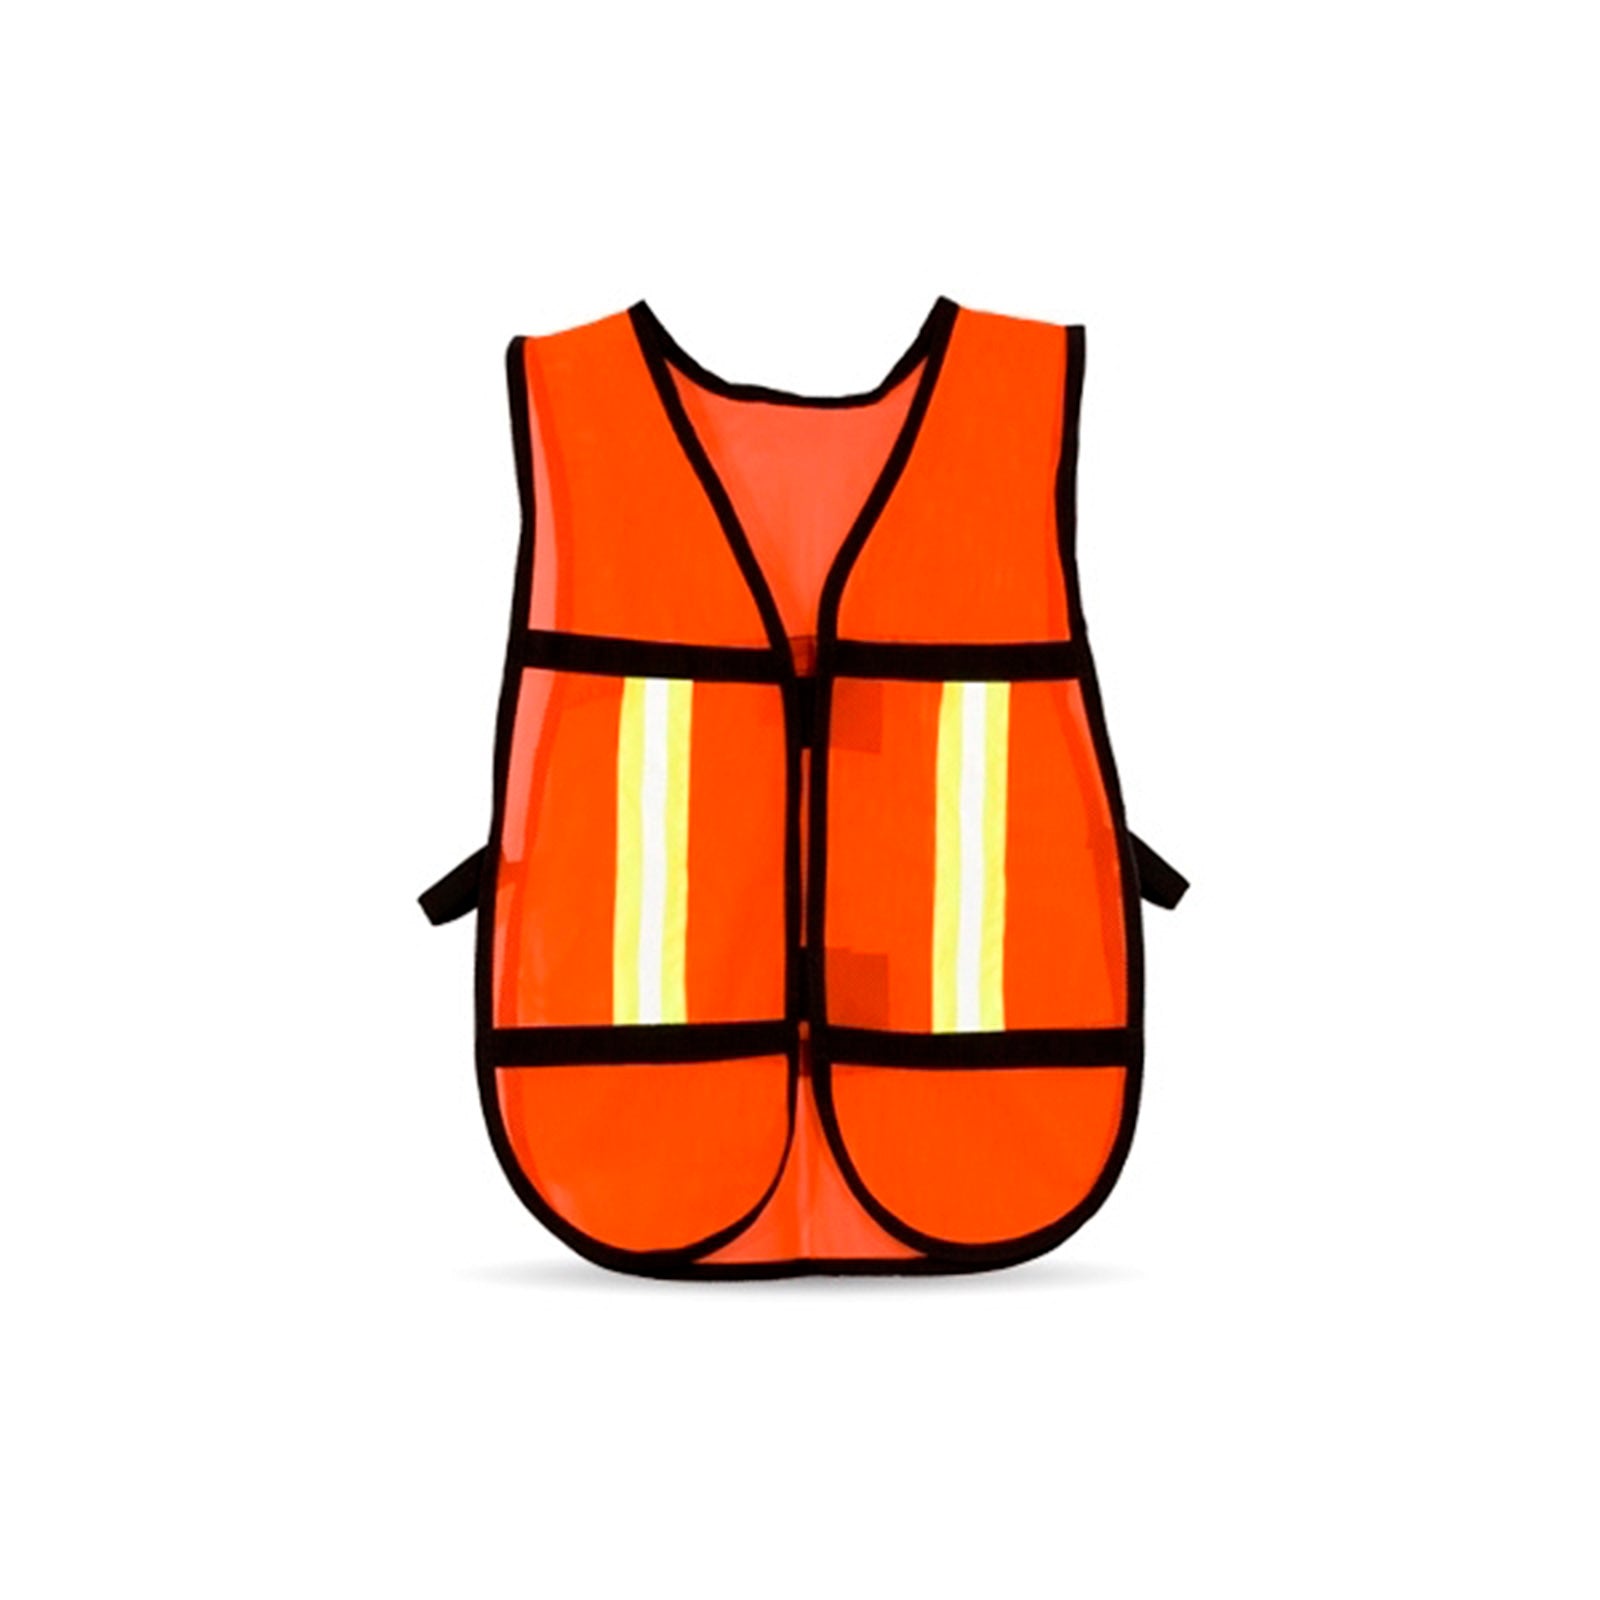  JKSafety - Chaleco de seguridad reflectante de alta visibilidad  con 9 bolsillos para mujer, malla naranja neón, tiras reflectantes con  bordes extendidos amarillos, cumple con la norma ANSI (168-naranja, L) 